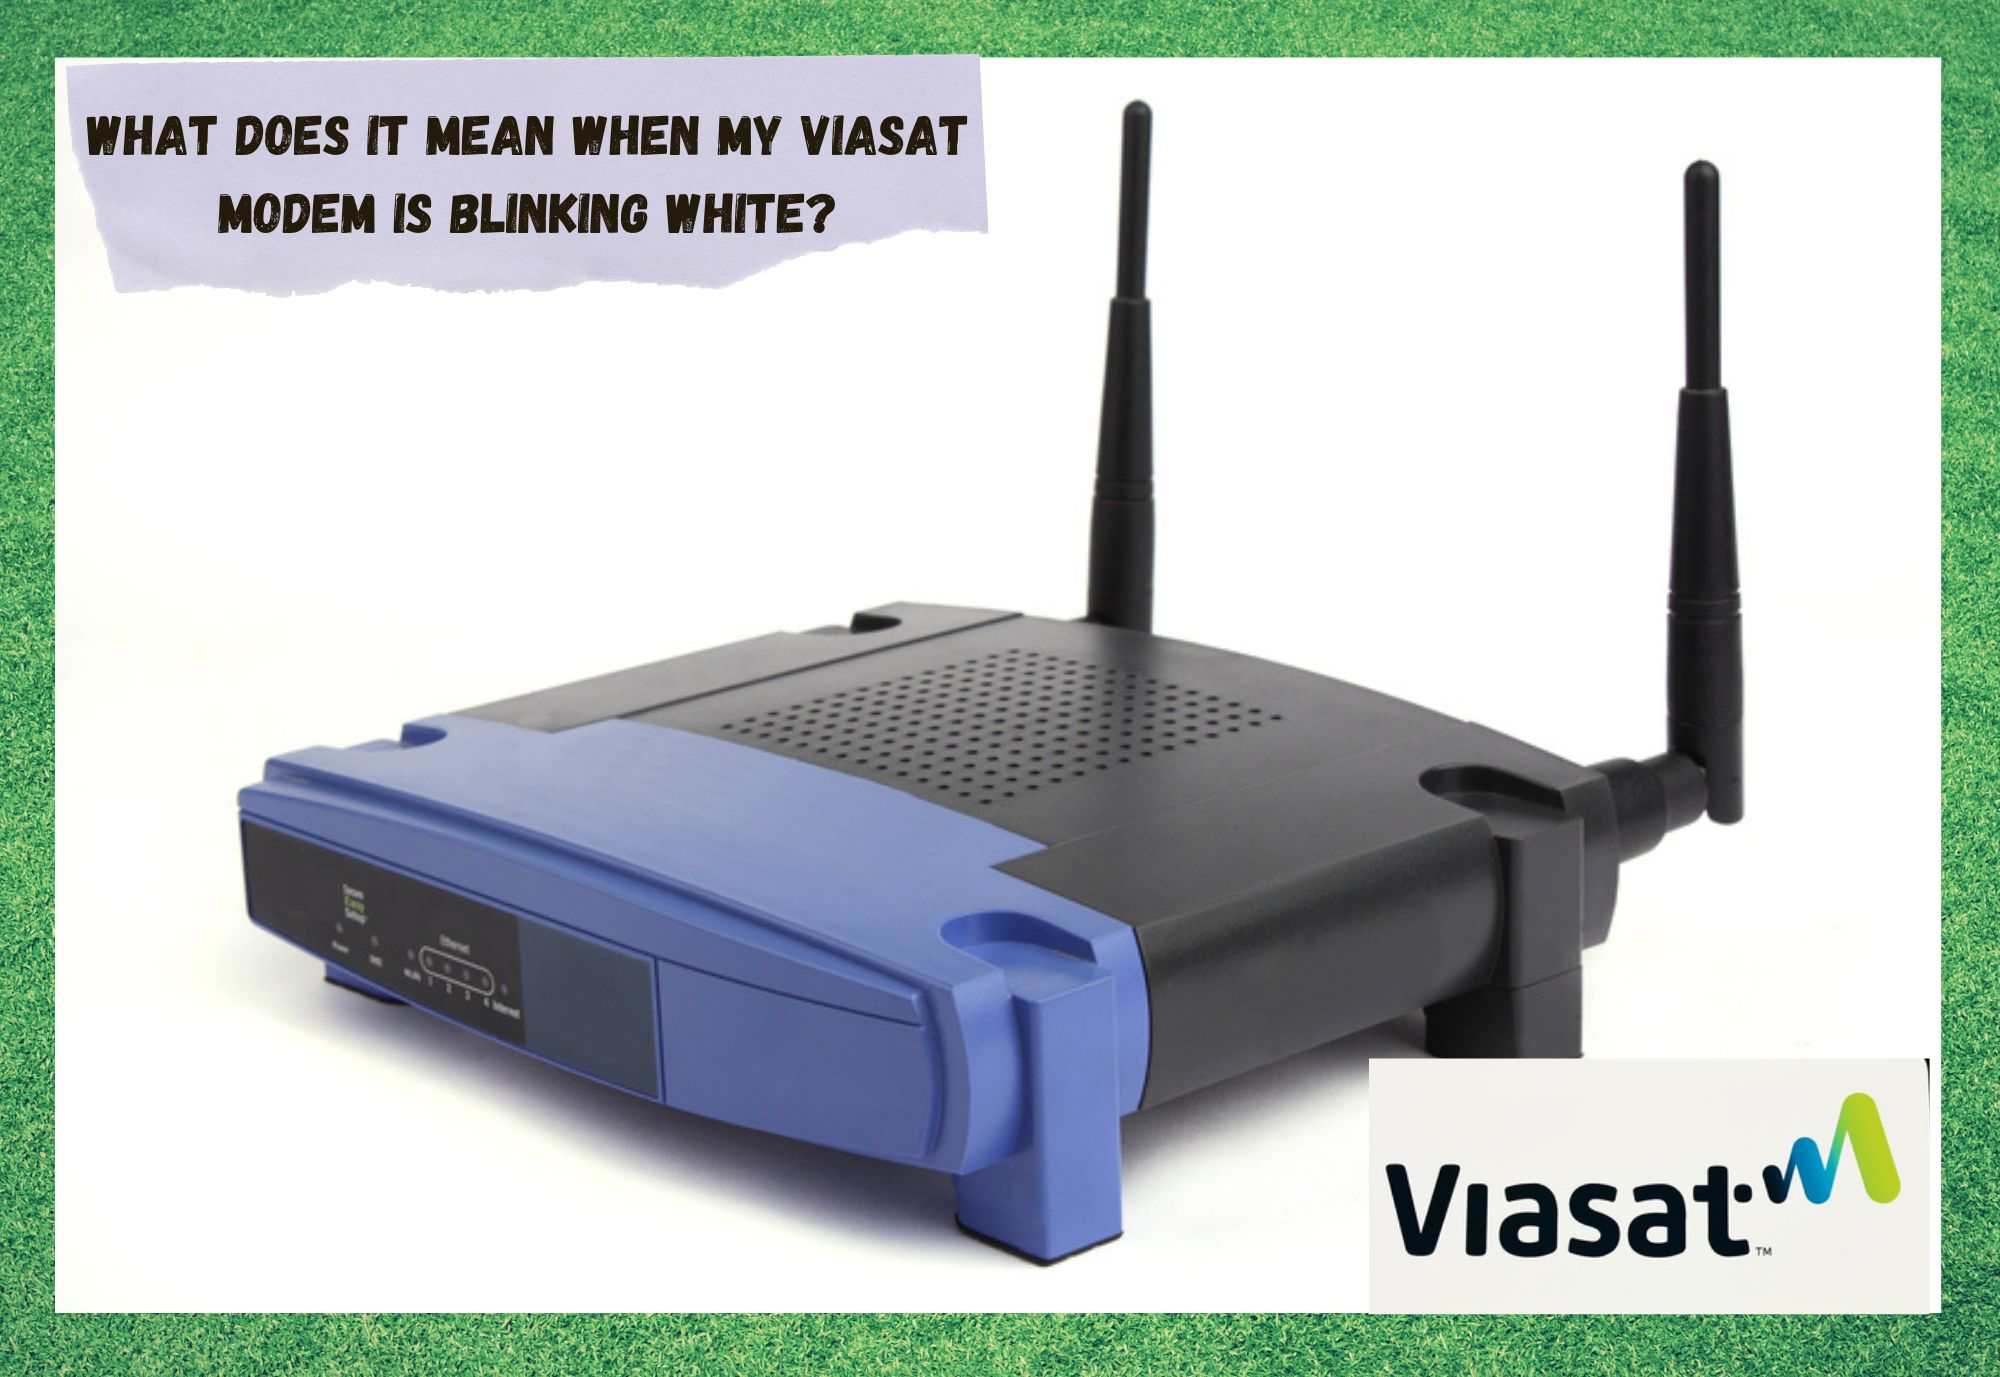 why is my viasat modem blinking white